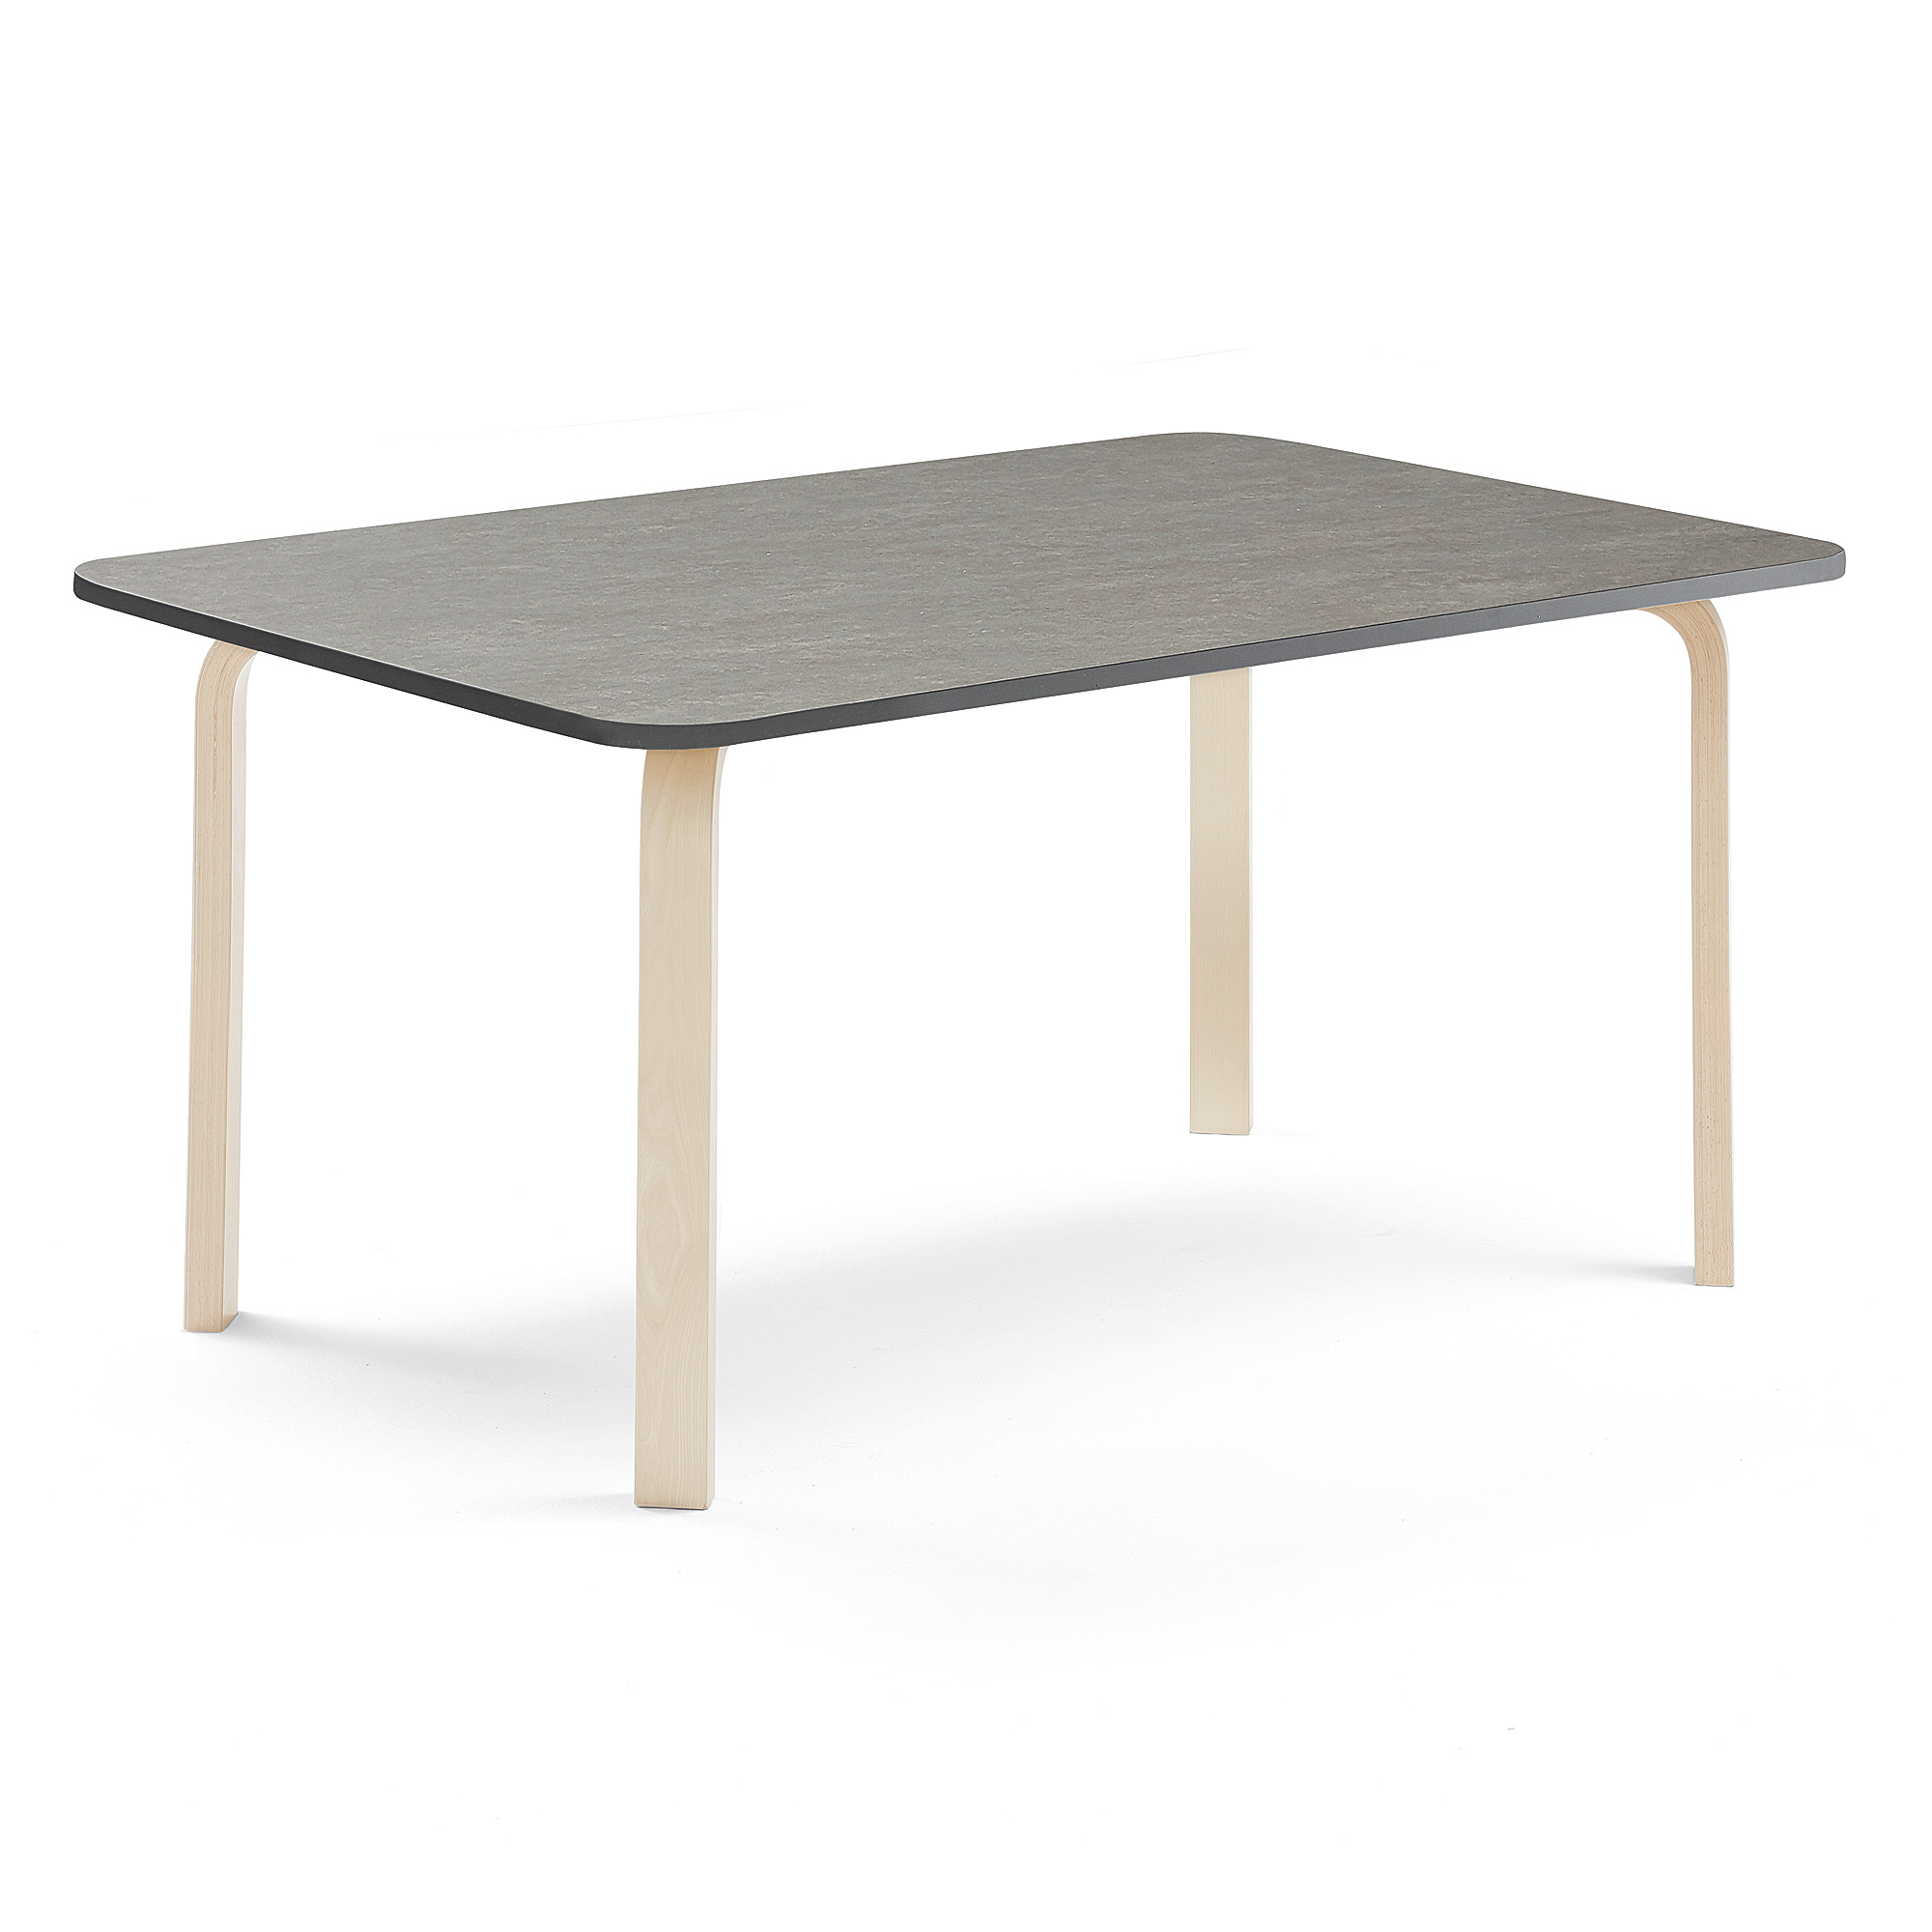 Stůl ELTON, 1800x700x640 mm, bříza, akustické linoleum, tmavě šedá